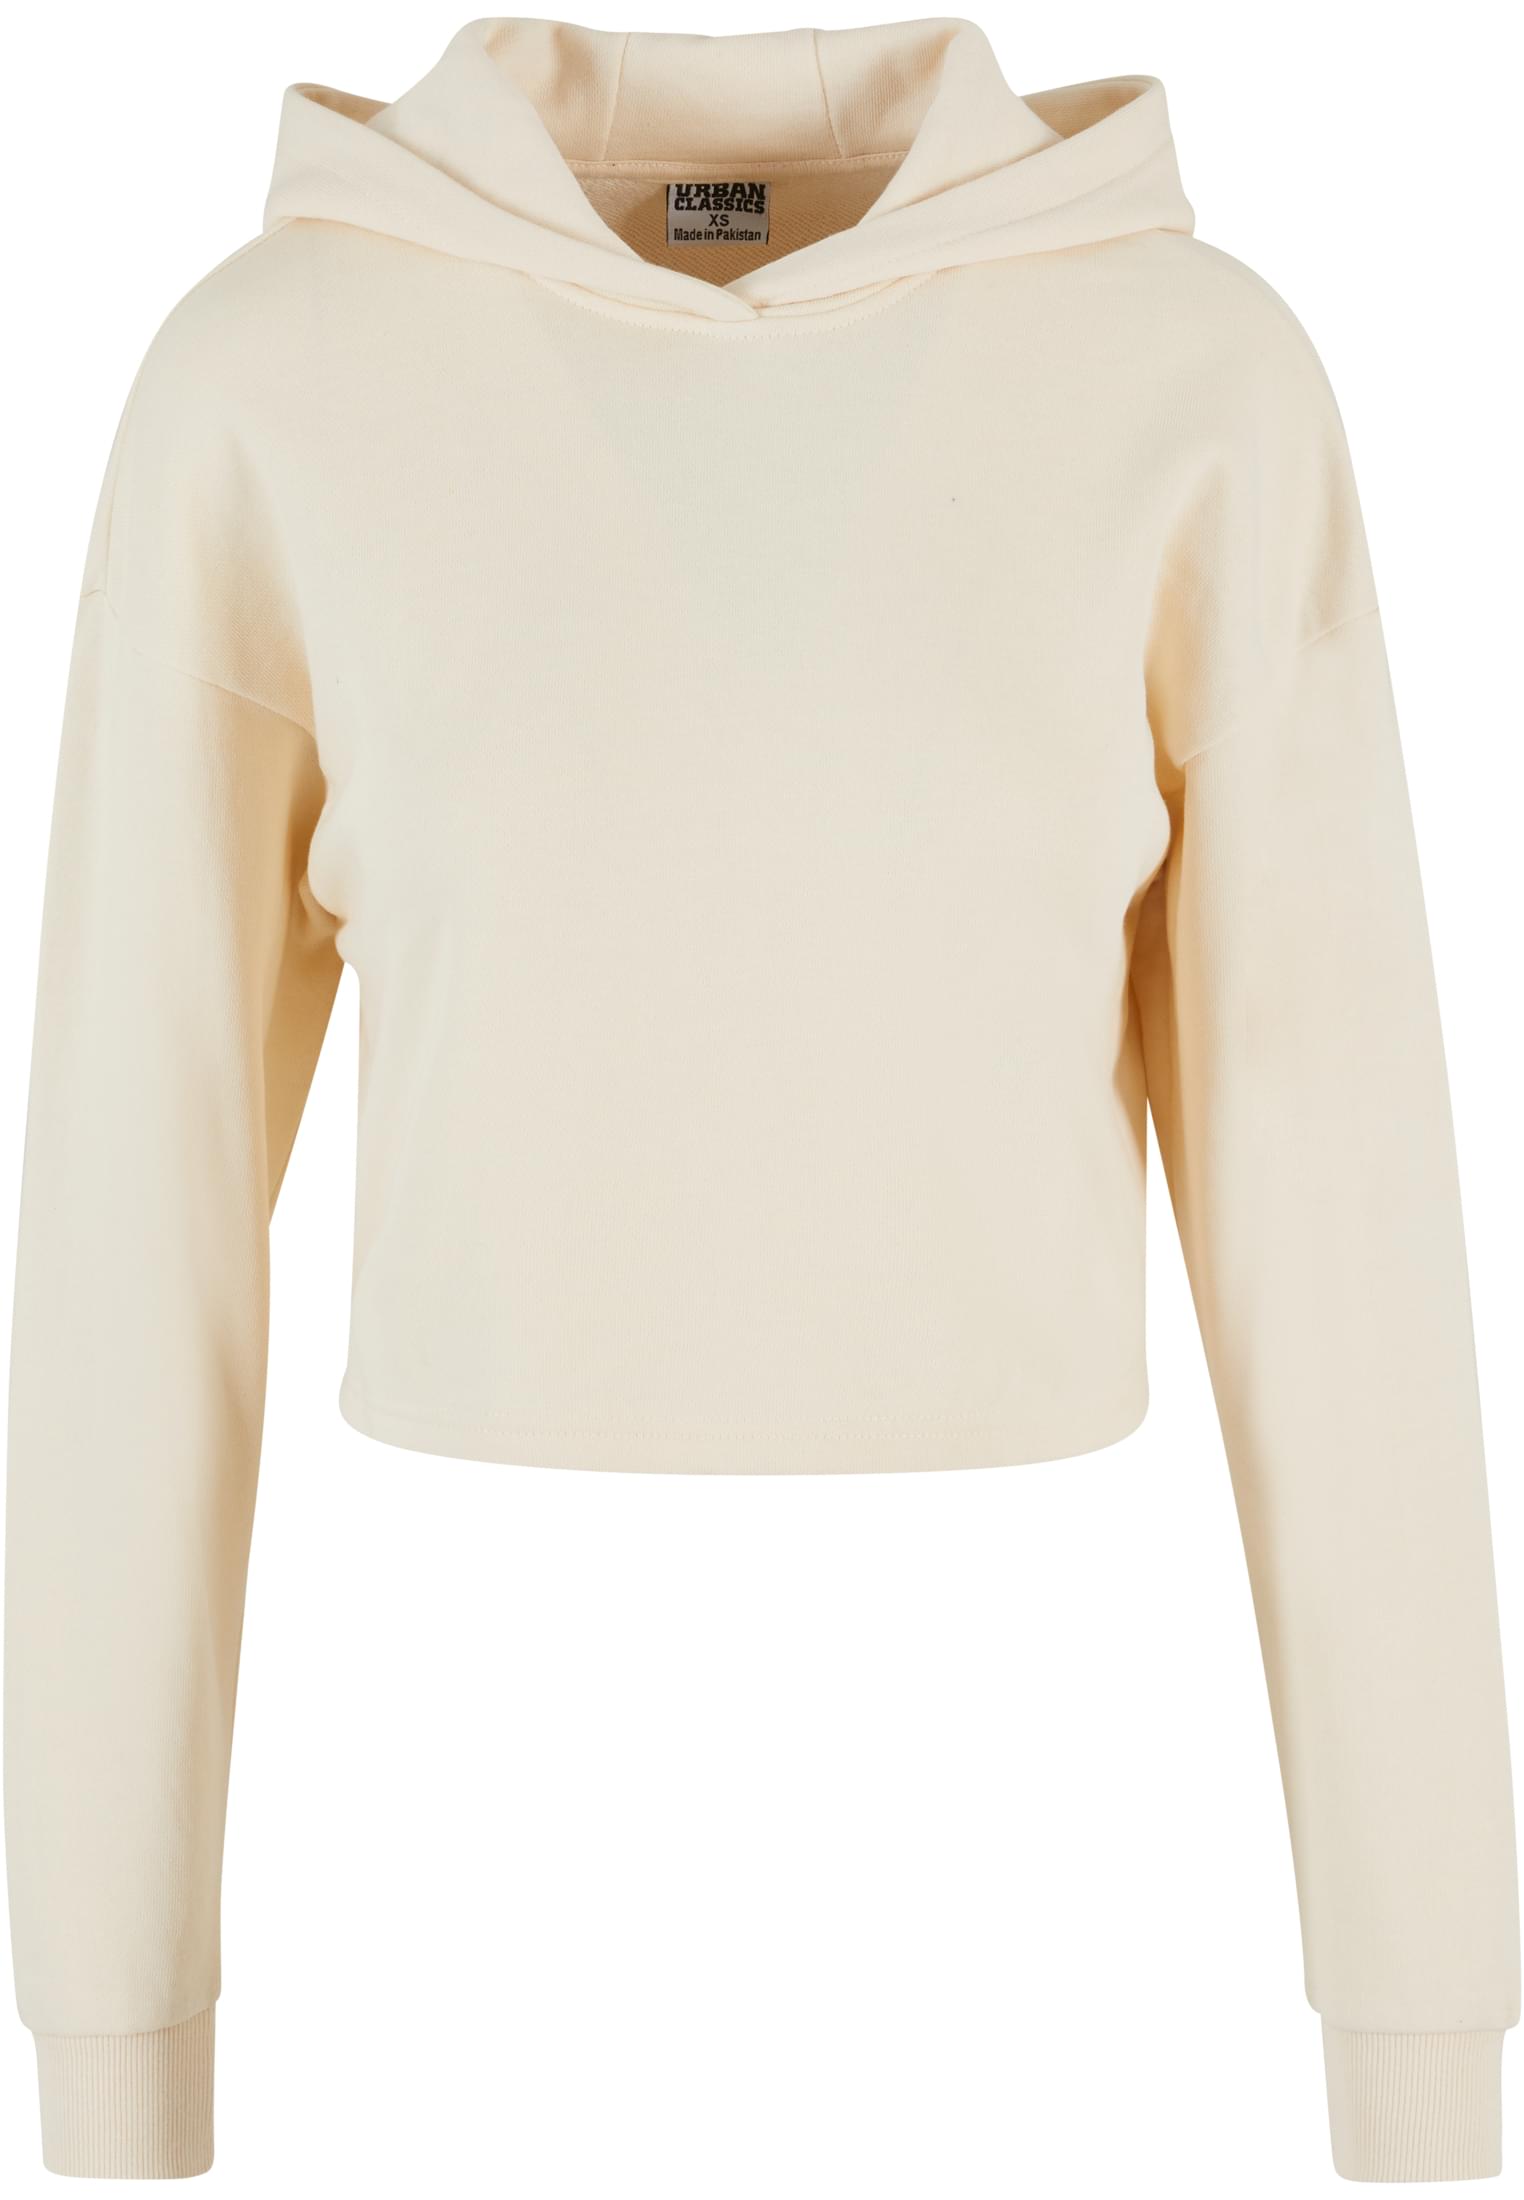 Women's Oversized Hooded Sweatshirt Light Terry - Cream